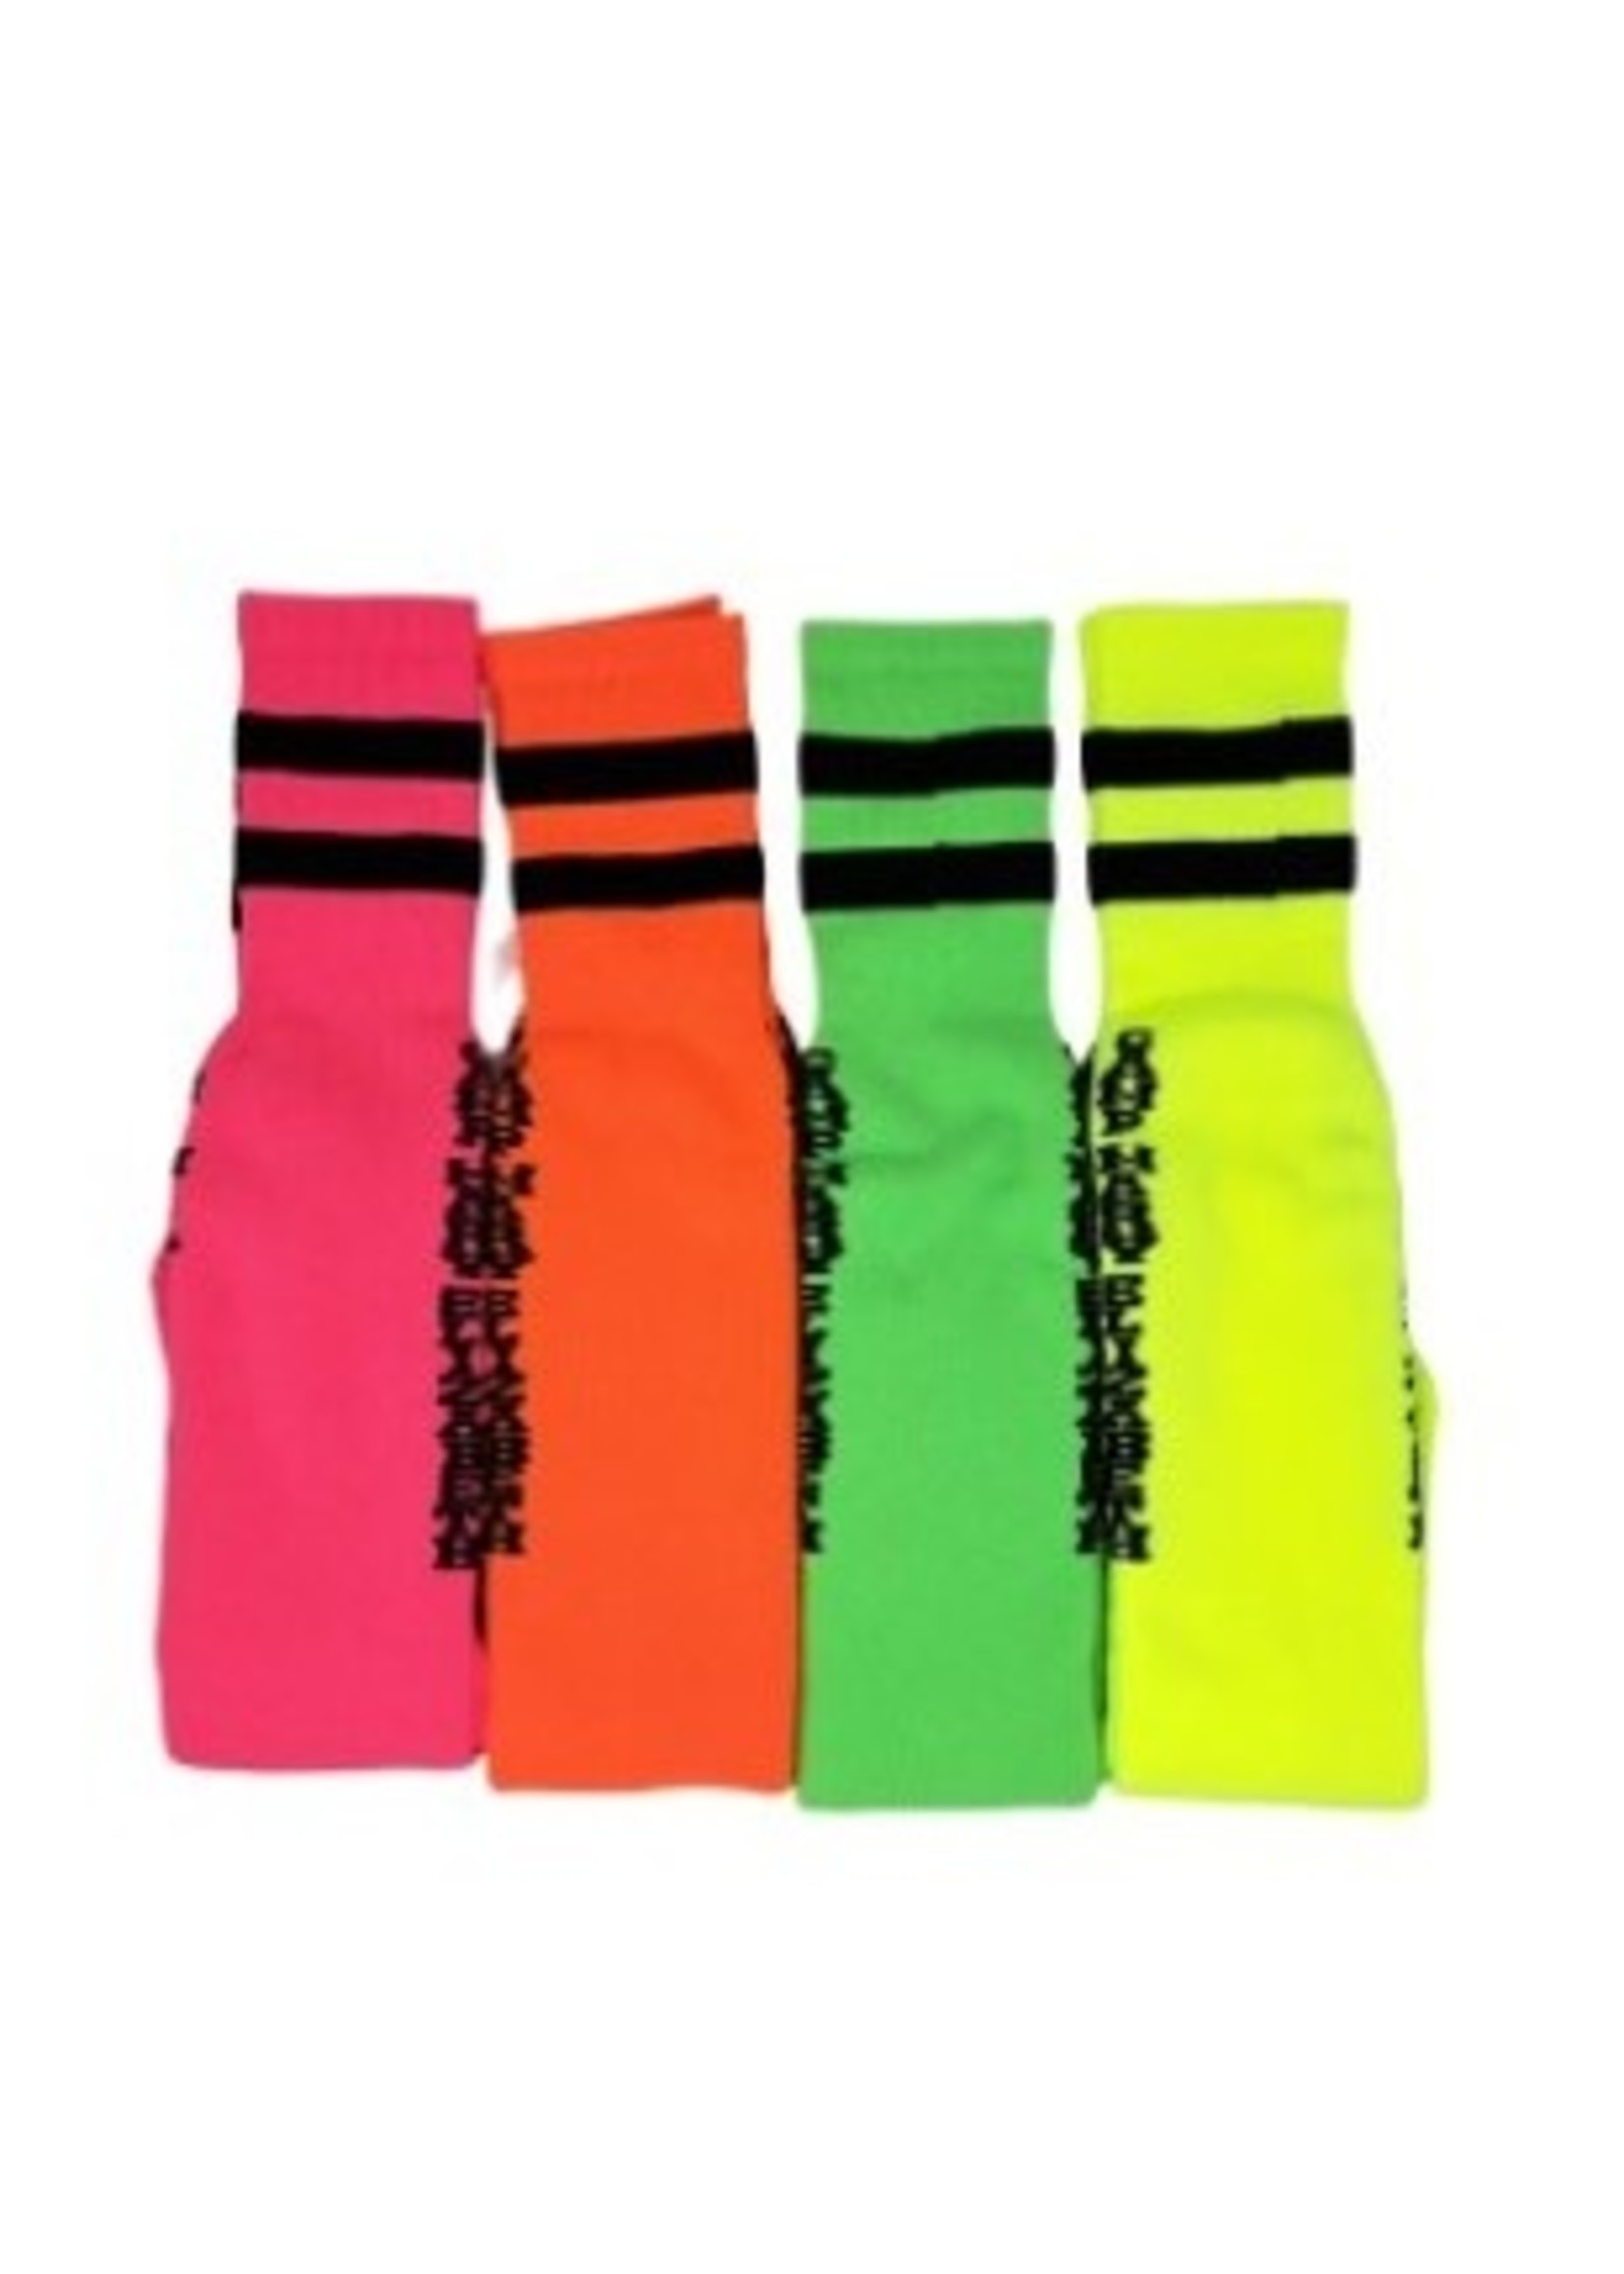 CME Neon Tube Socks (Adult Size)